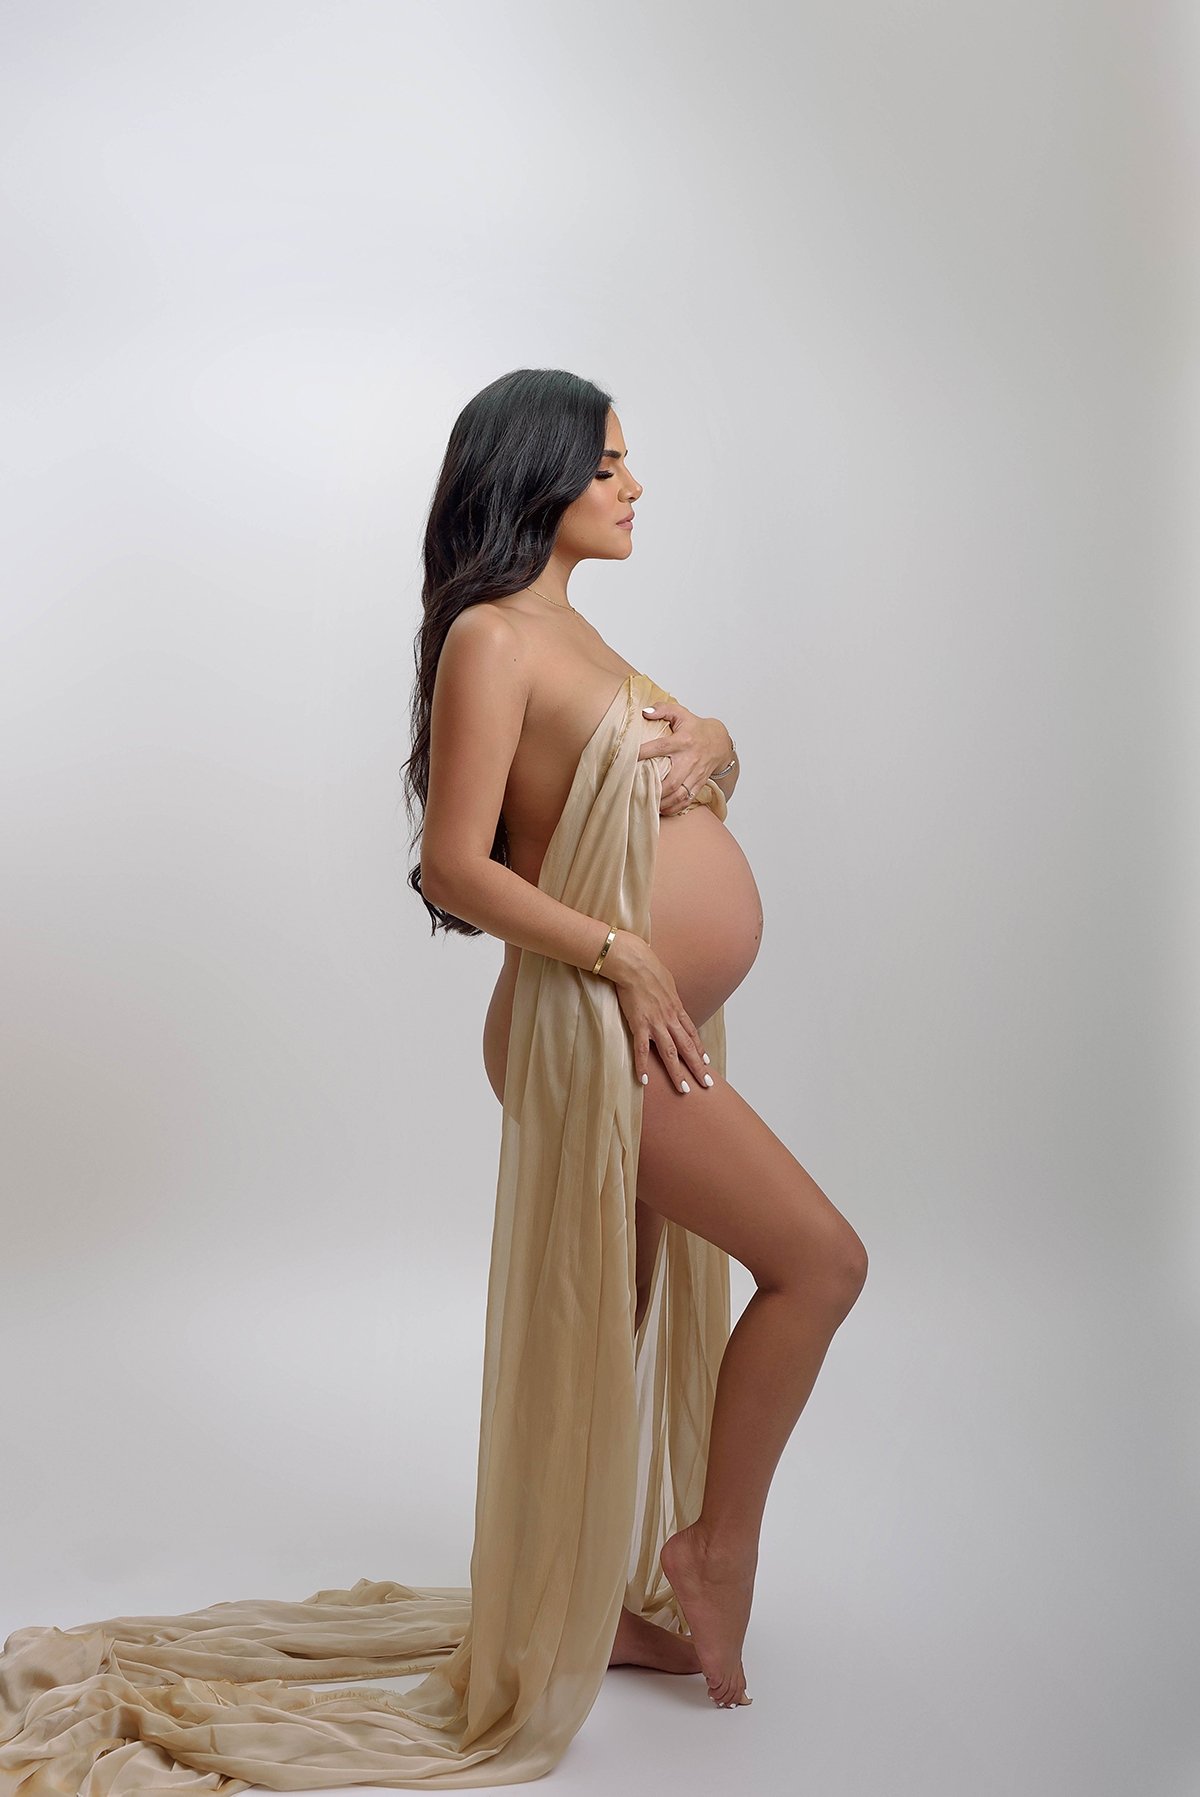 maternity-pregnancy-photographer-san-juan-puerto-rico-fabric-dress-gown-fotografa-maternidad-embarazo-21.jpg